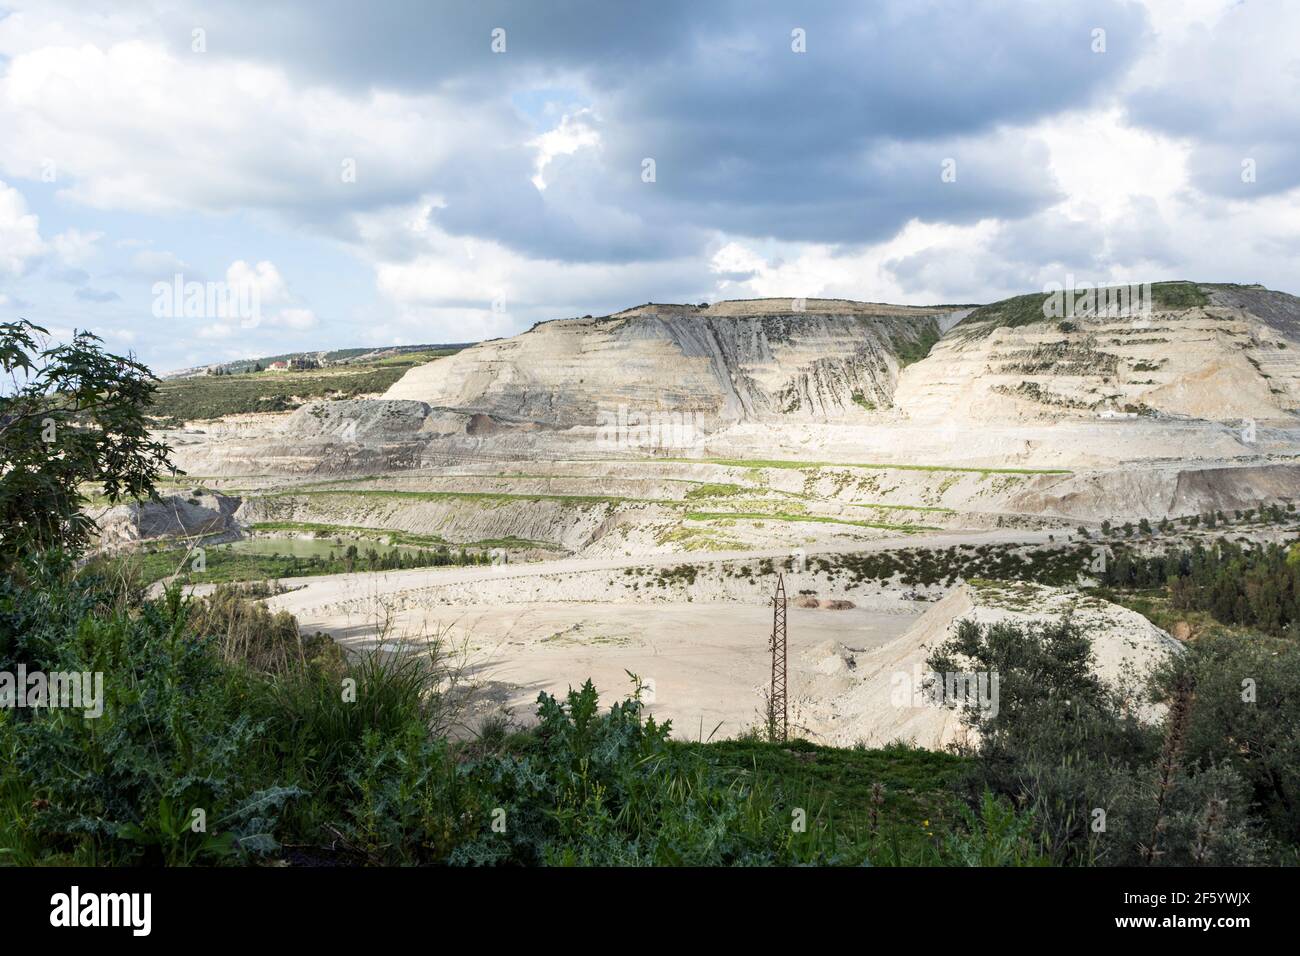 Badbhoun cement quarries in Chekka town, Koura district, Lebanon Stock Photo